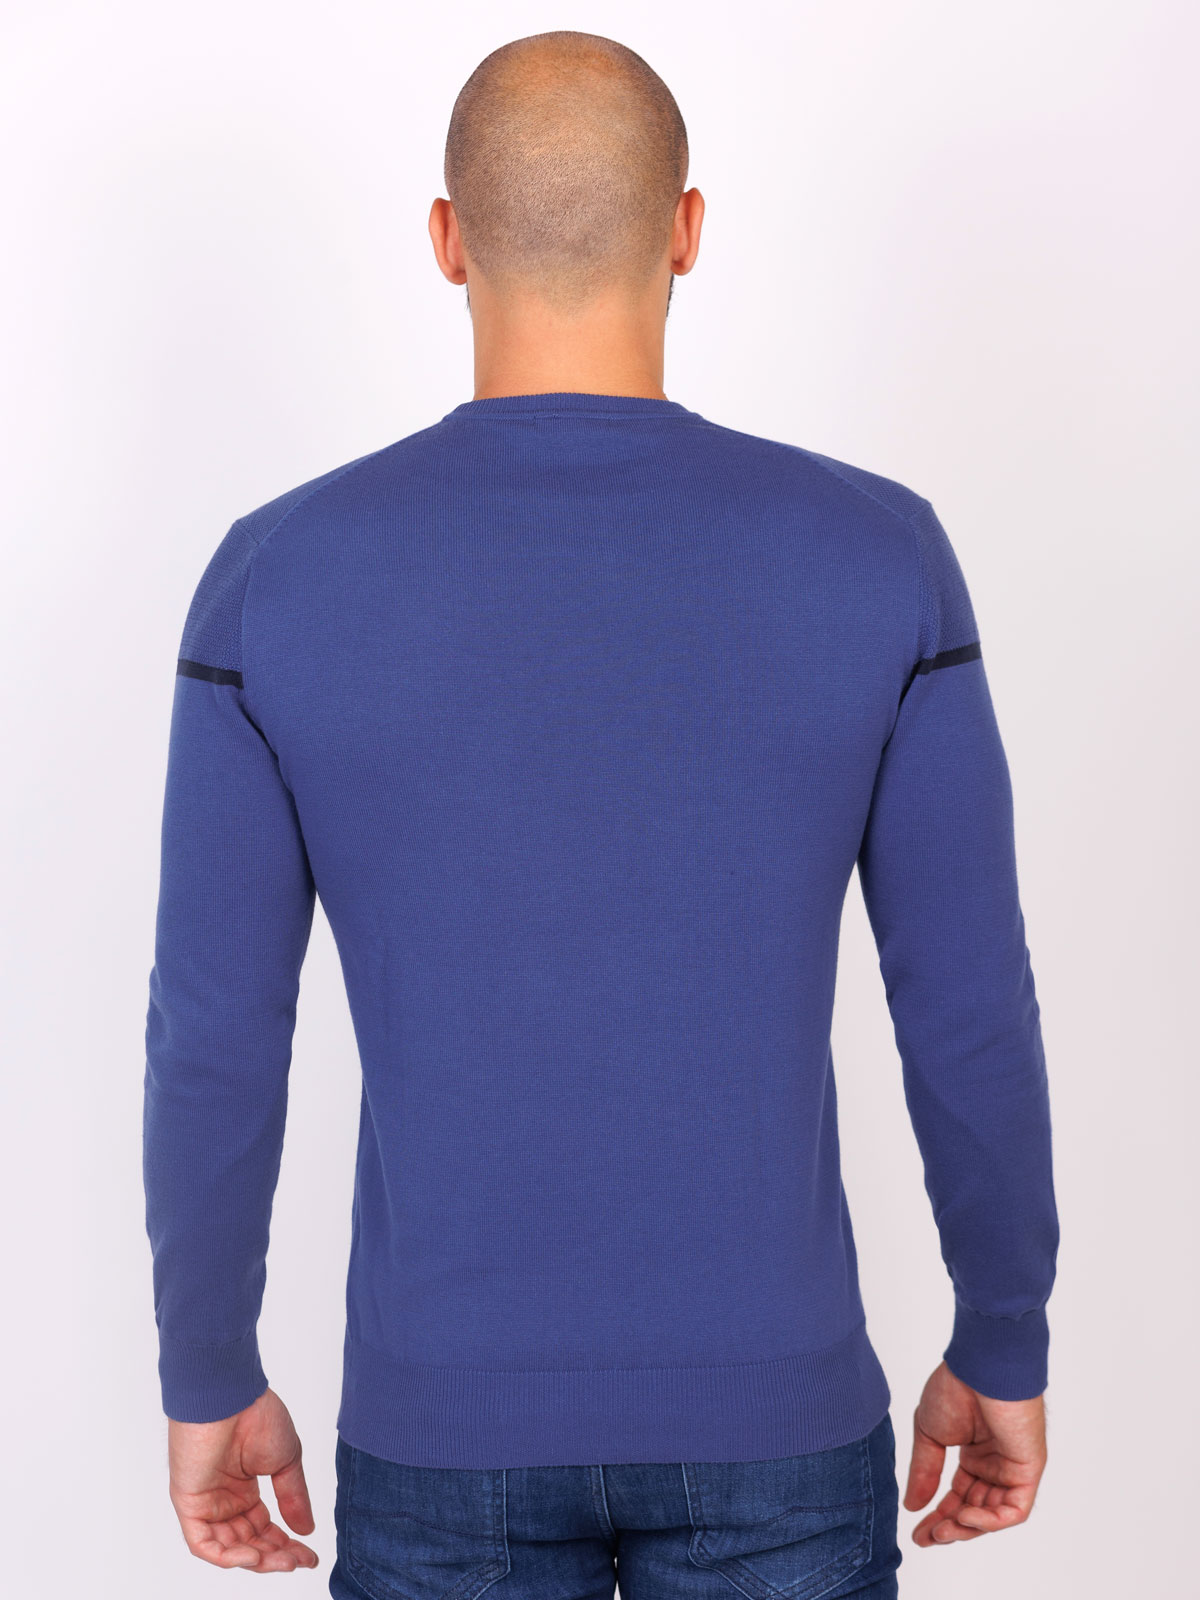 Bluza albastra cu dungi negre - 35282 € 34.87 img2